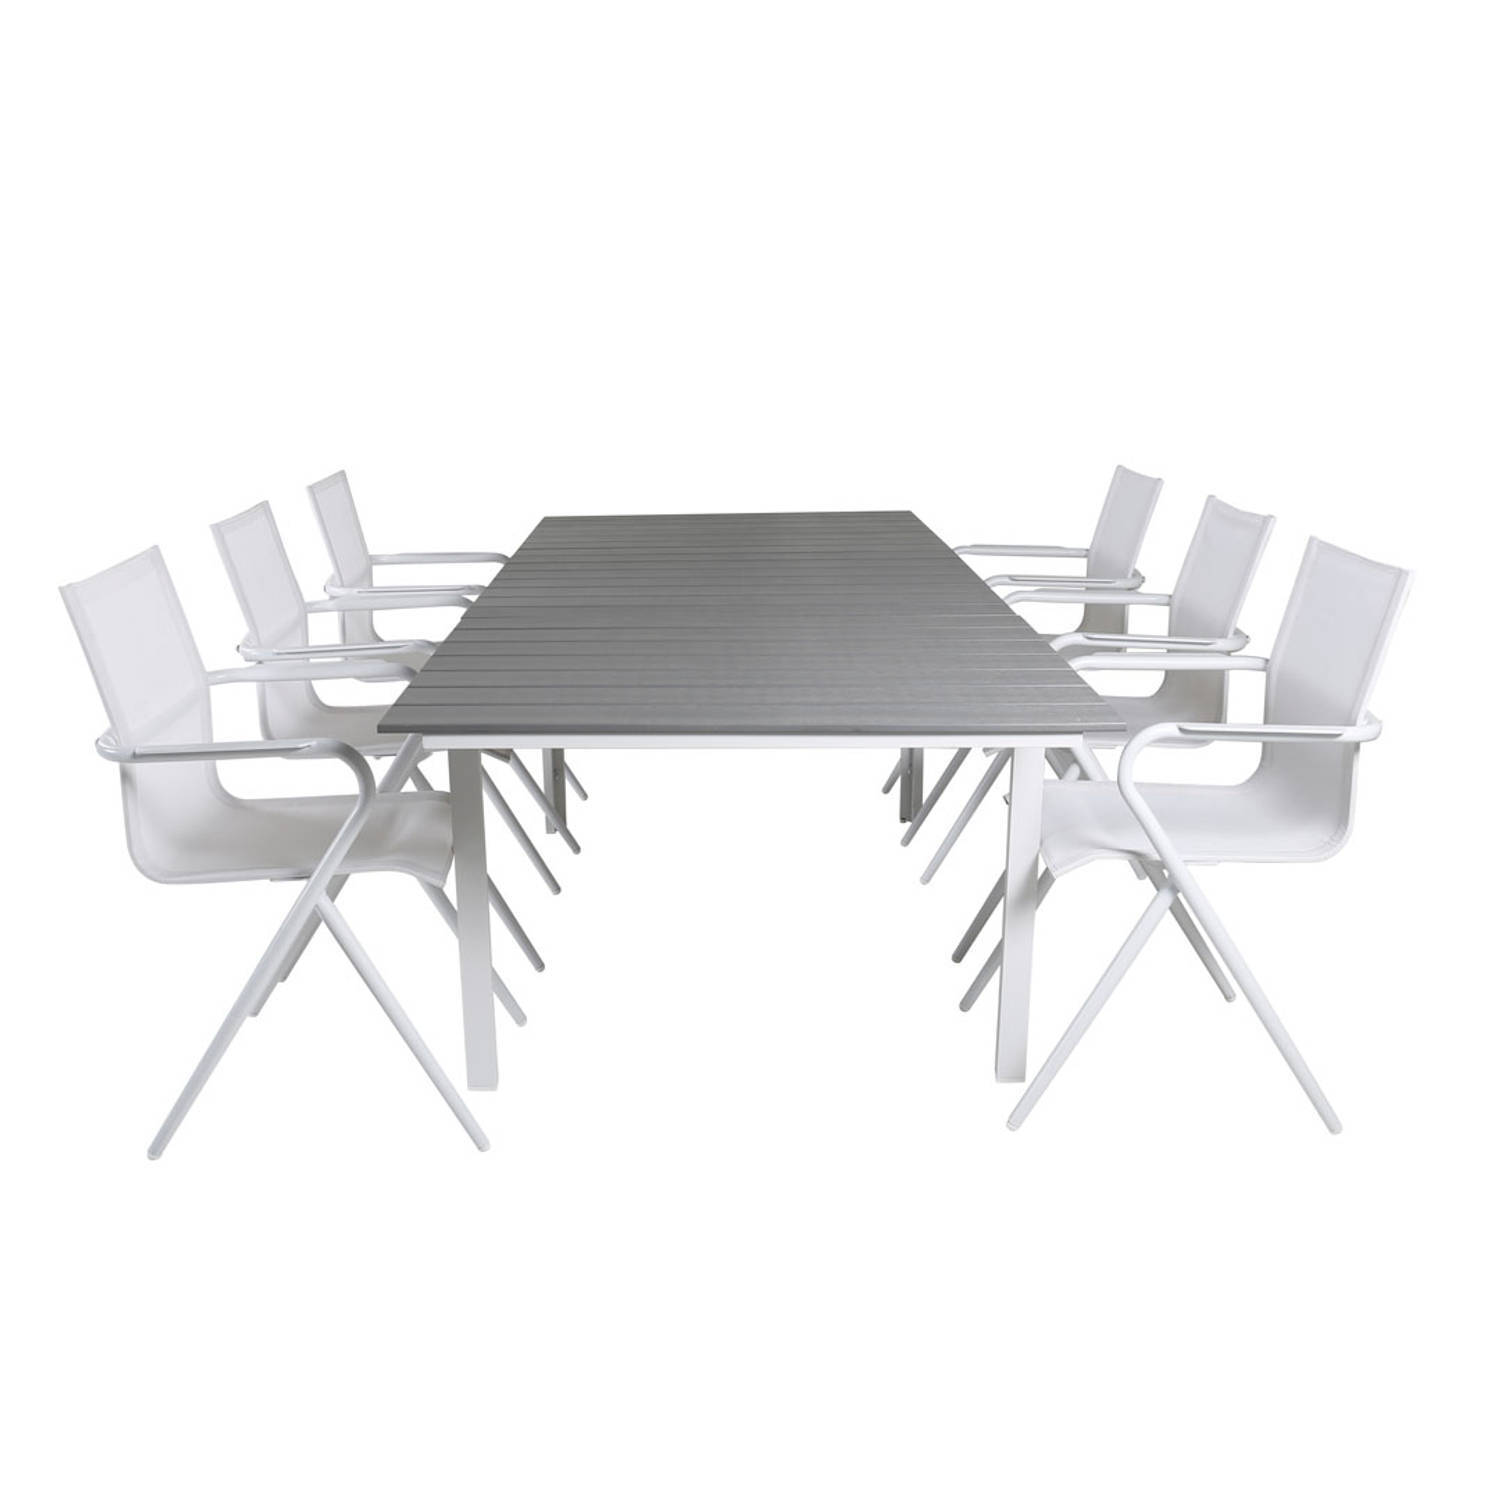 Hioshop Levels tuinmeubelset tafel 100x160/240cm en 6 stoel Alina wit, grijs.